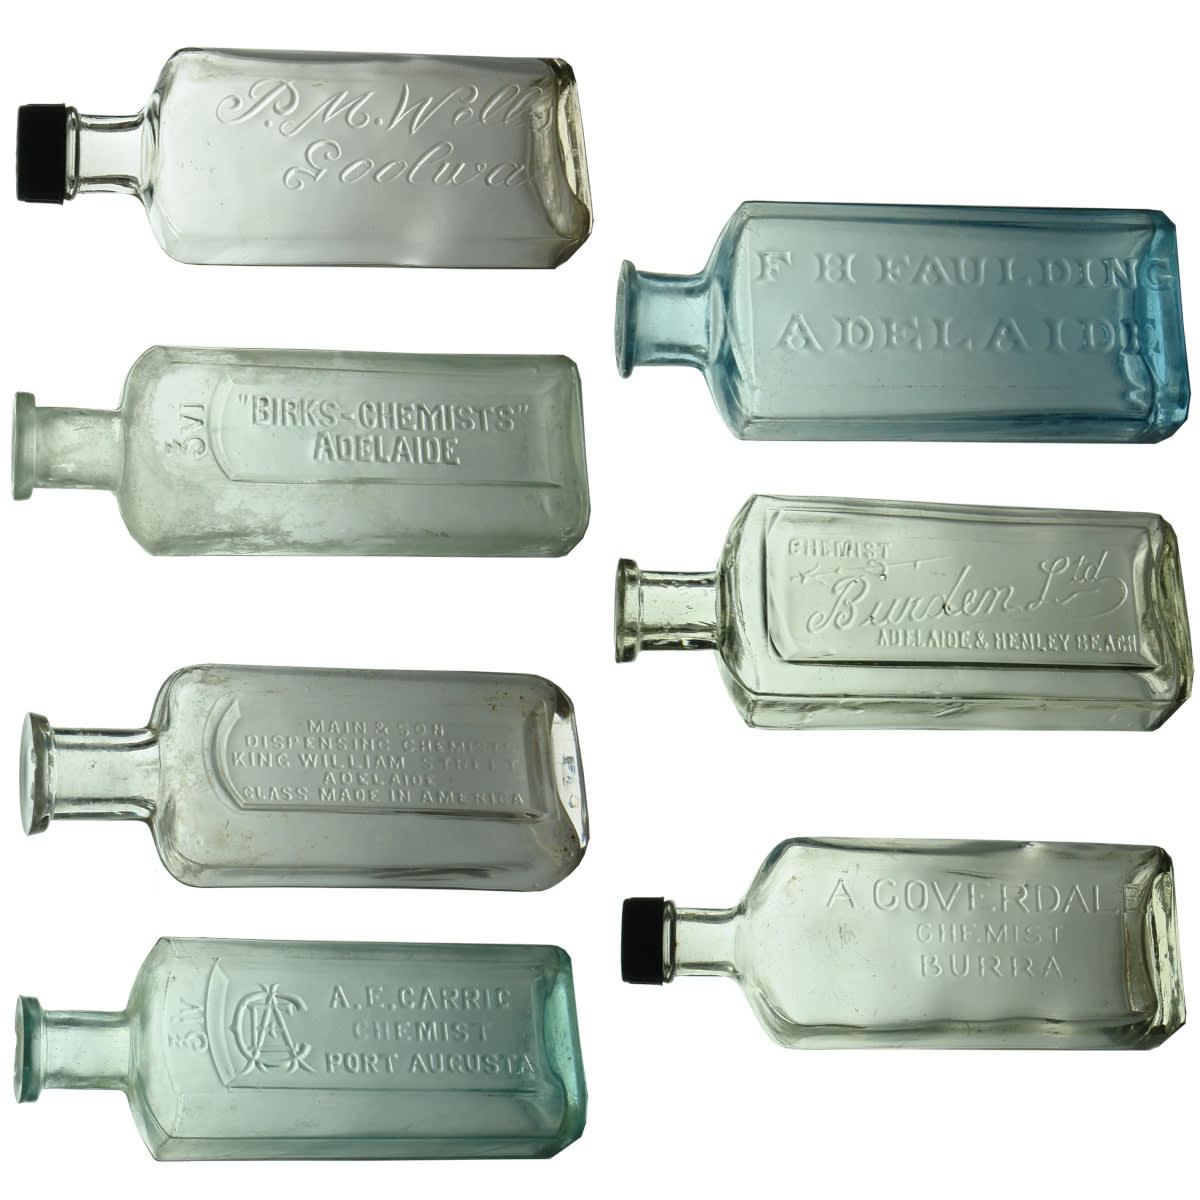 7 South Australian Chemist Bottles: Carrig, Port Augusta; Main & Son, Adelaide; Birks; P. M. Wells, Goolwa; A. Coverdale, Burra; Burden, Henley Beach; Faulding. (South Australia)